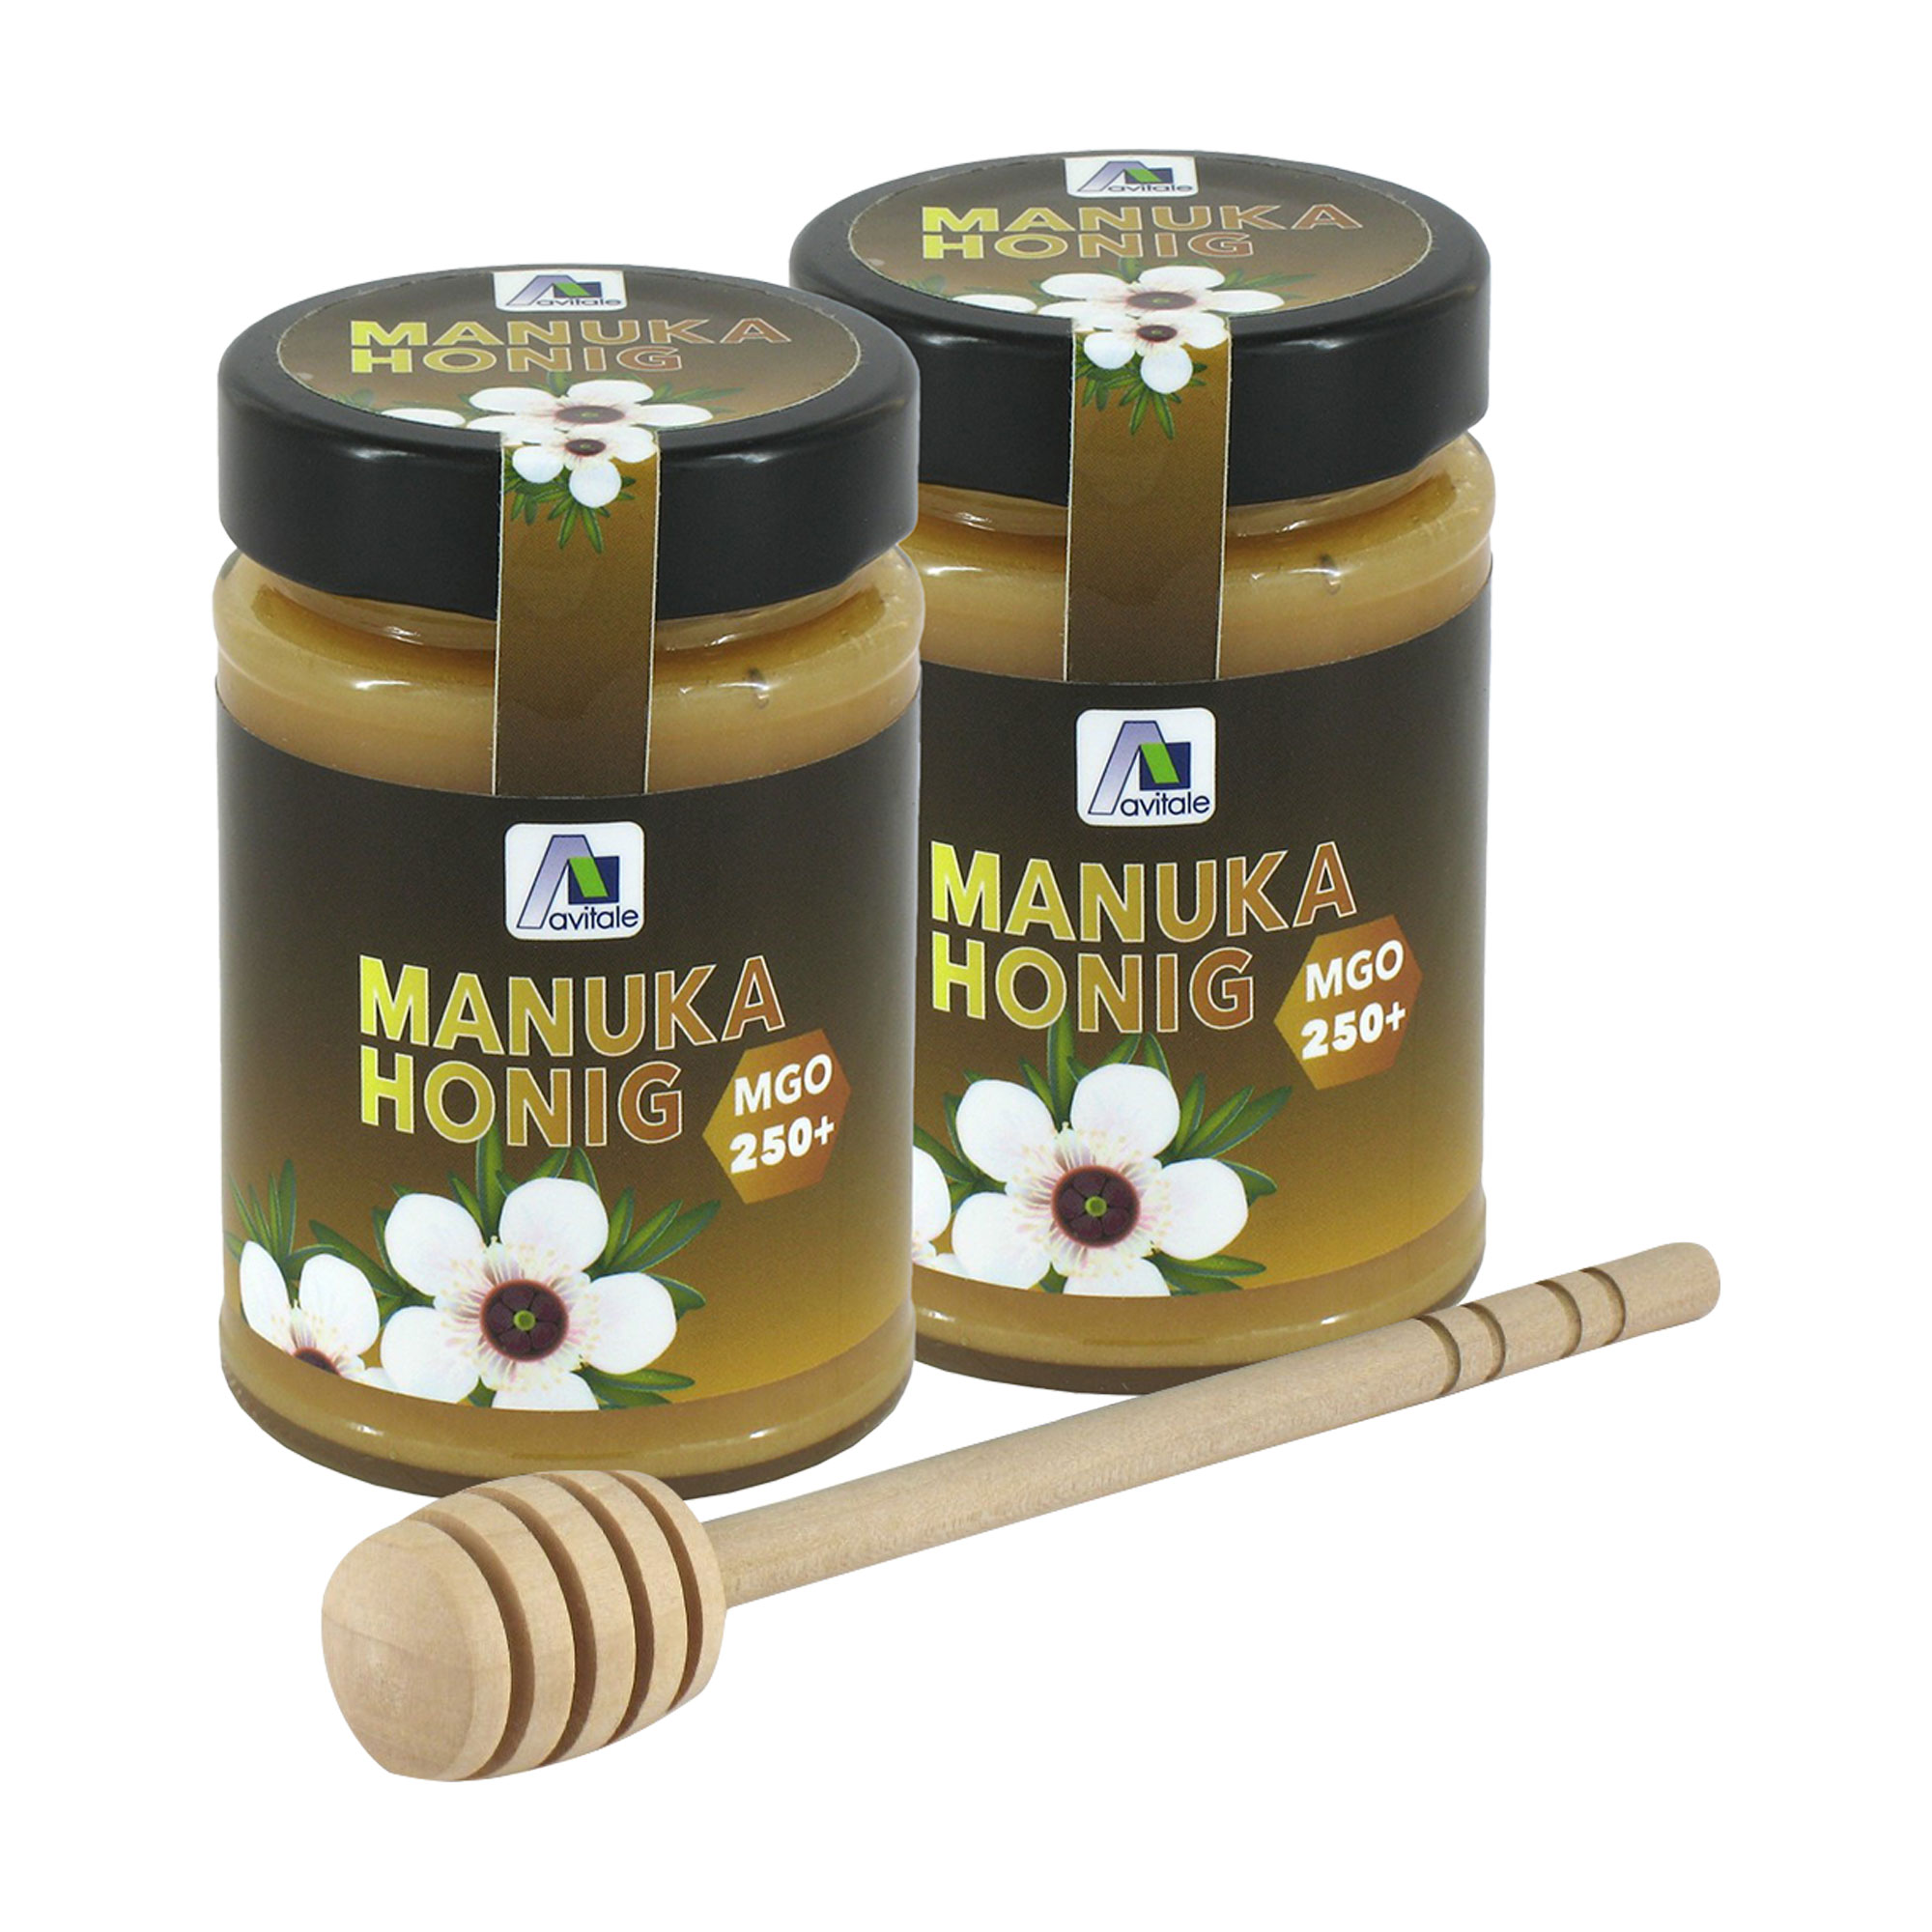 Honig aus Neuseeland mit mindestens 250 mg Methylglyoxal (MGO) pro Kilogramm Honig. Inkl. Honiglöffel.